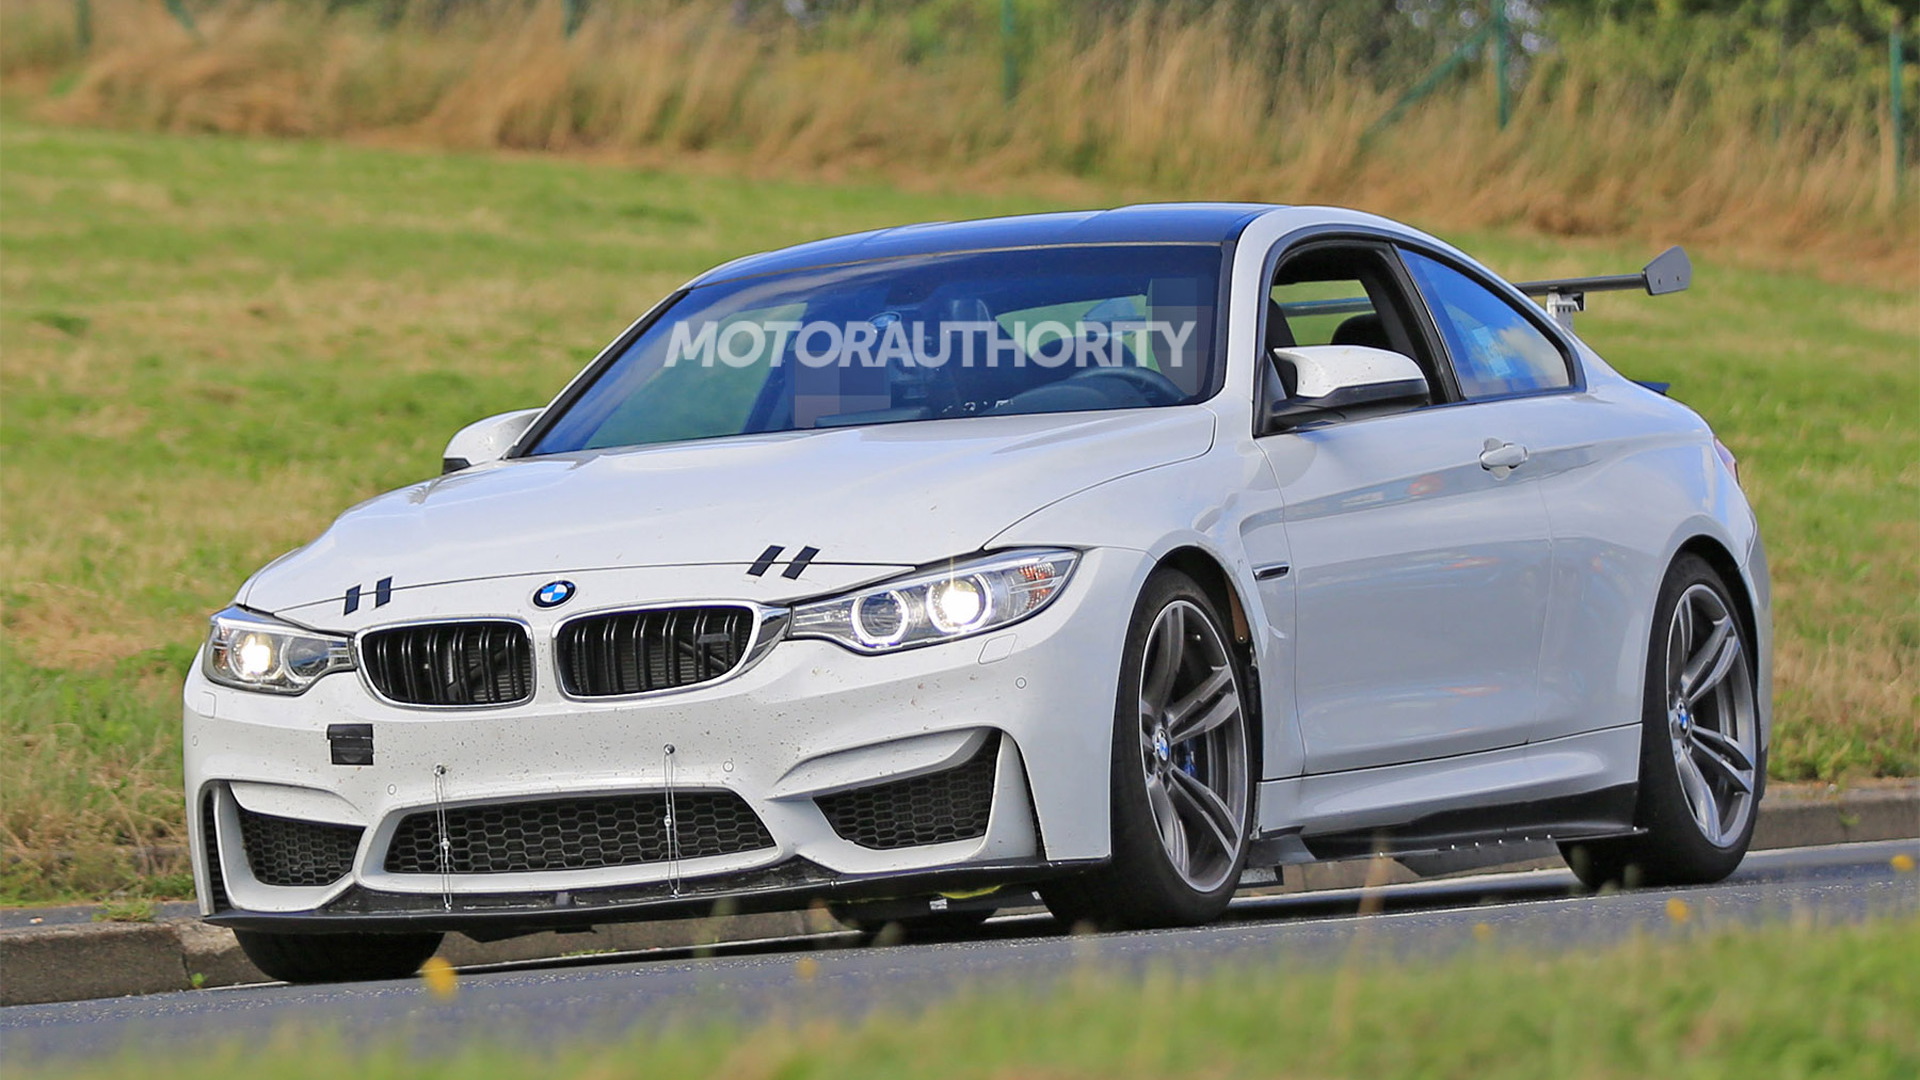 2018 BMW M4 GT4 race car spy shots - Image via S. Baldauf/SB-Medien